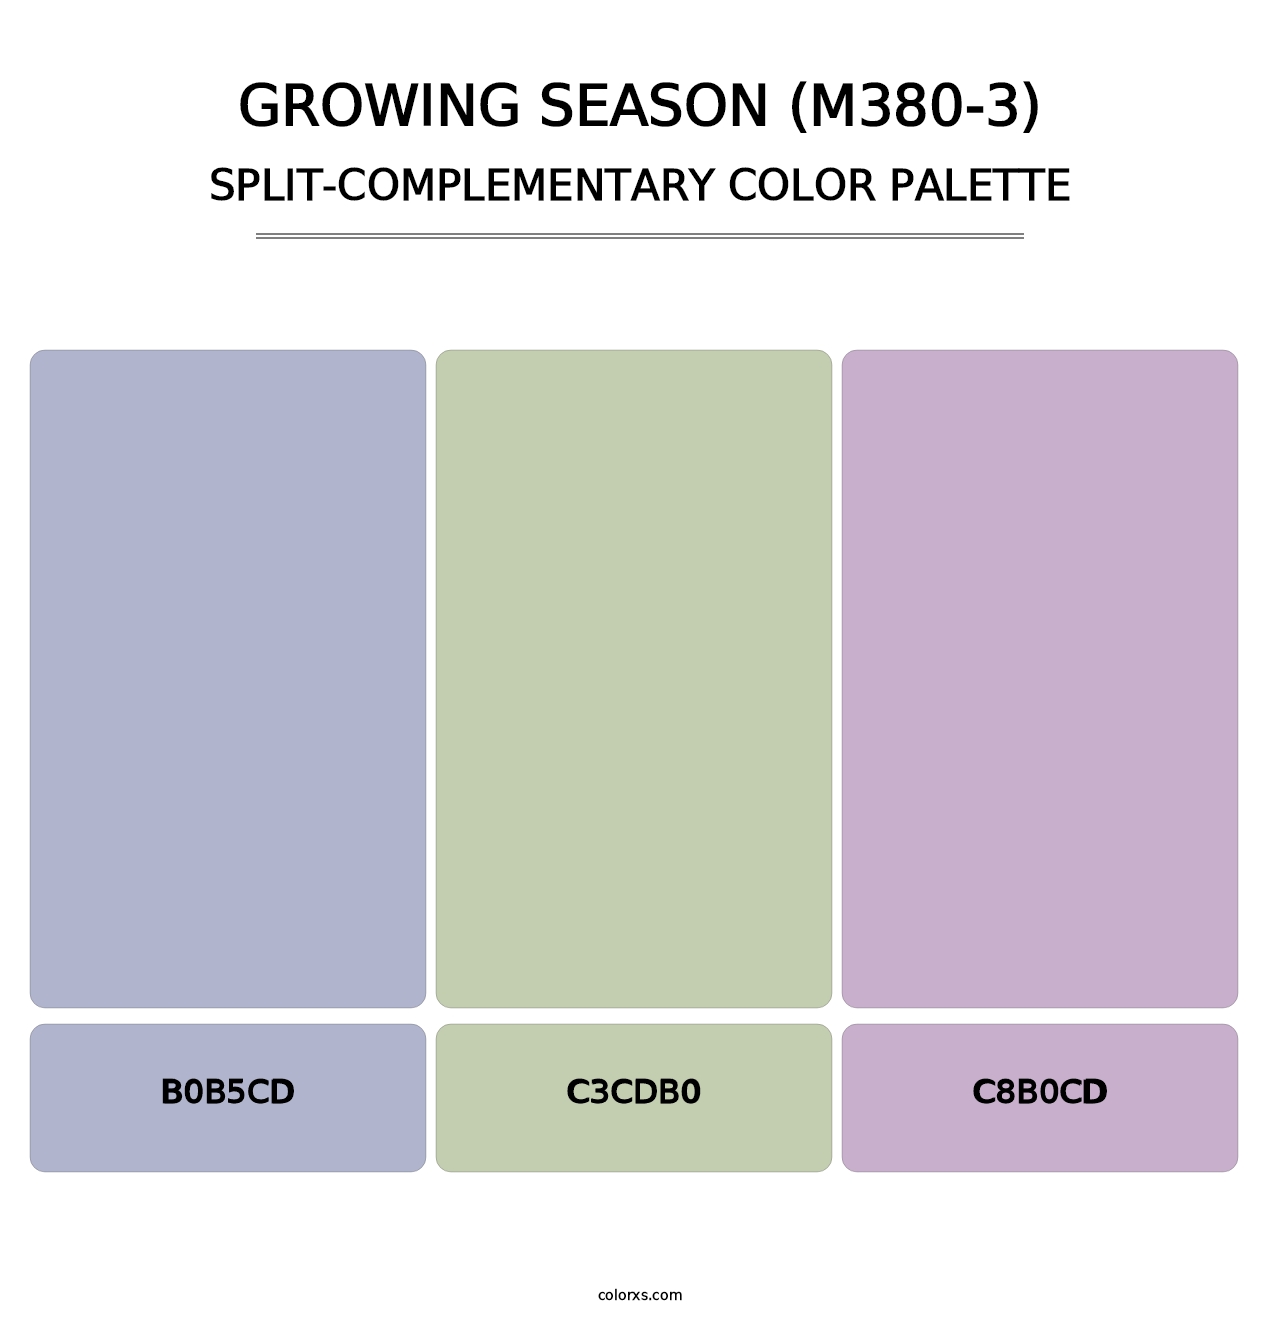 Growing Season (M380-3) - Split-Complementary Color Palette